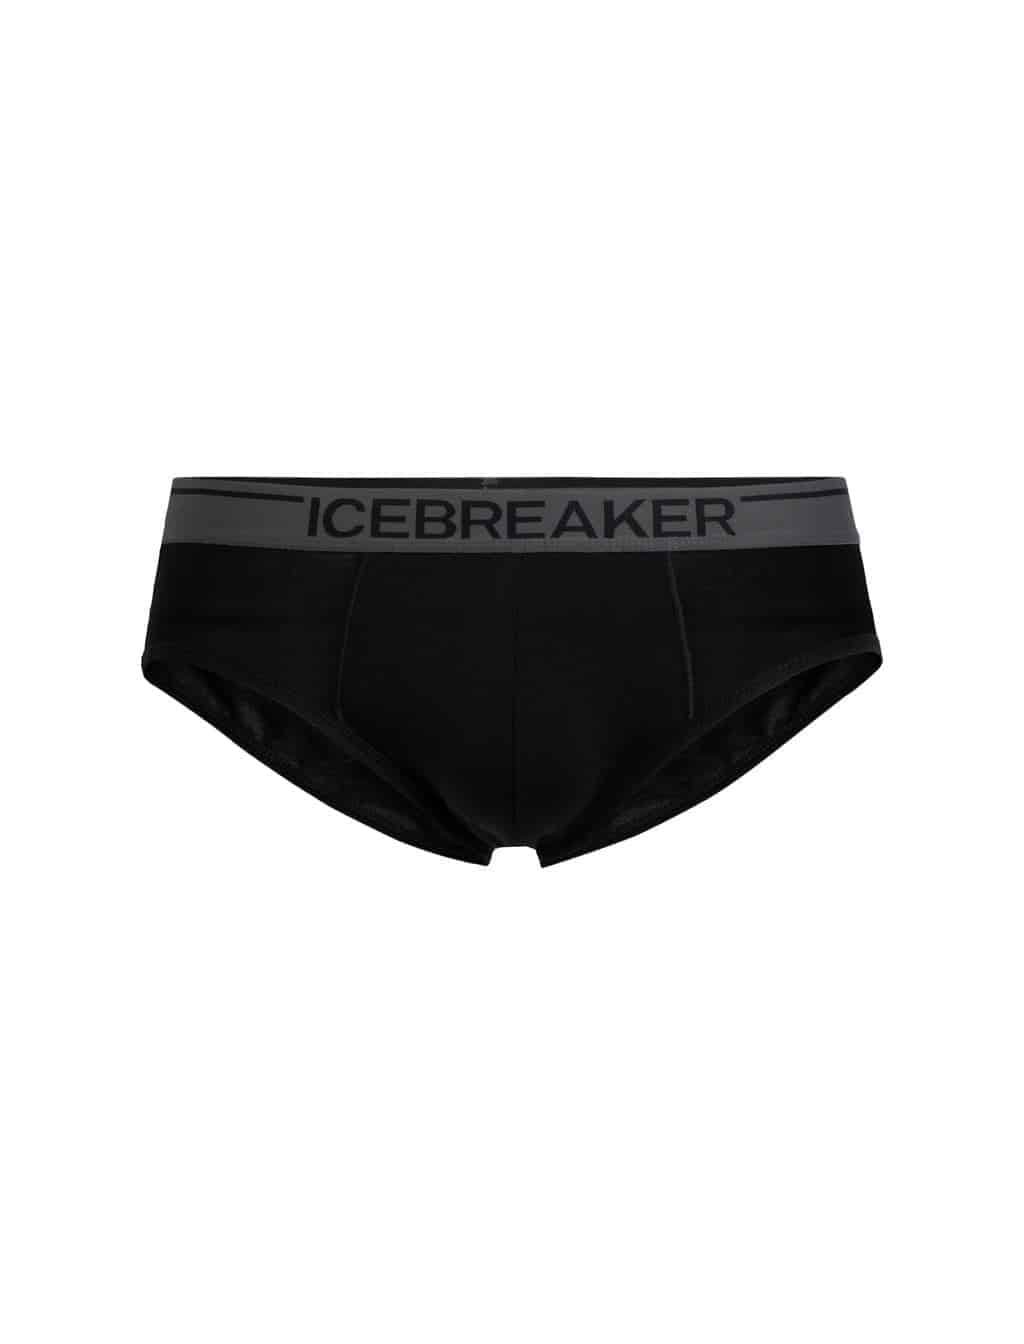 Icebreaker Men's Merino Anatomica Briefs